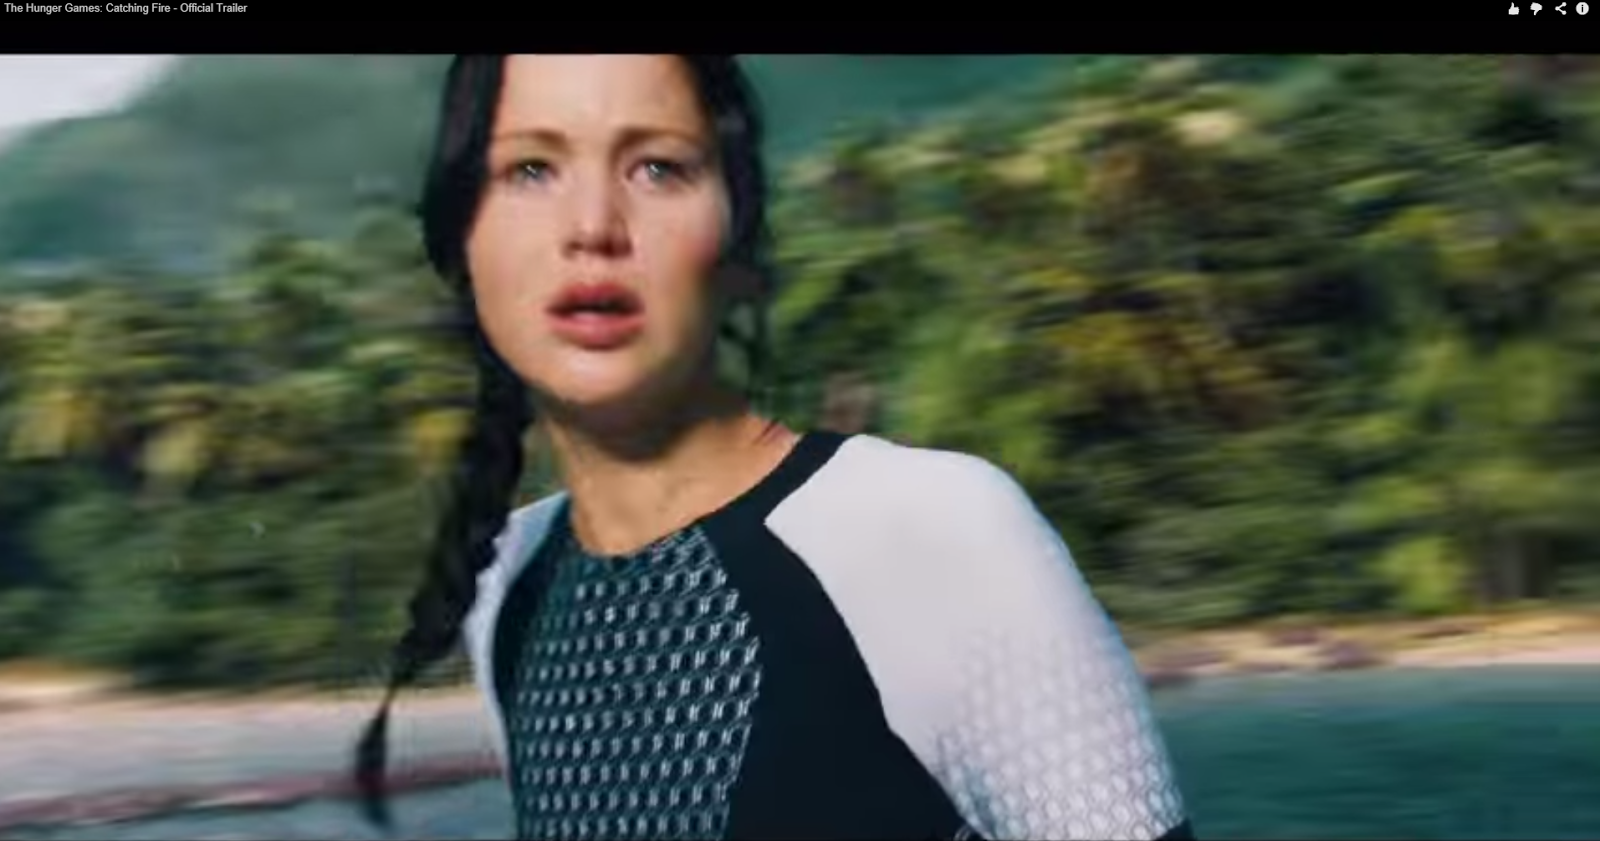 Hunger Games Catching Fire Trailer Screencap